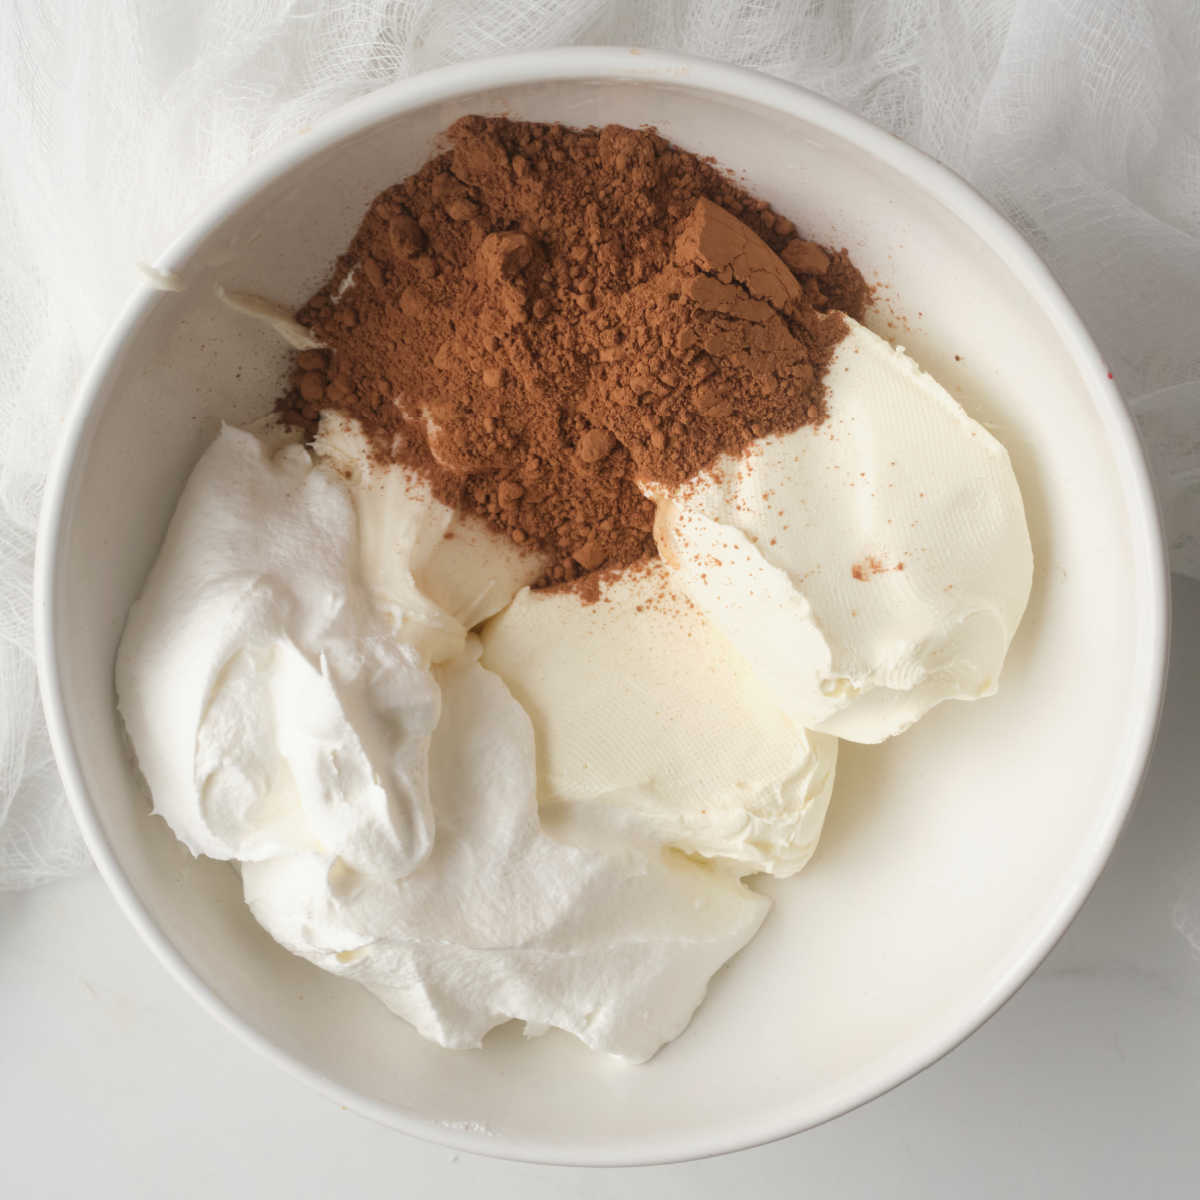 ingredients for chocolate dessert dip in bowl